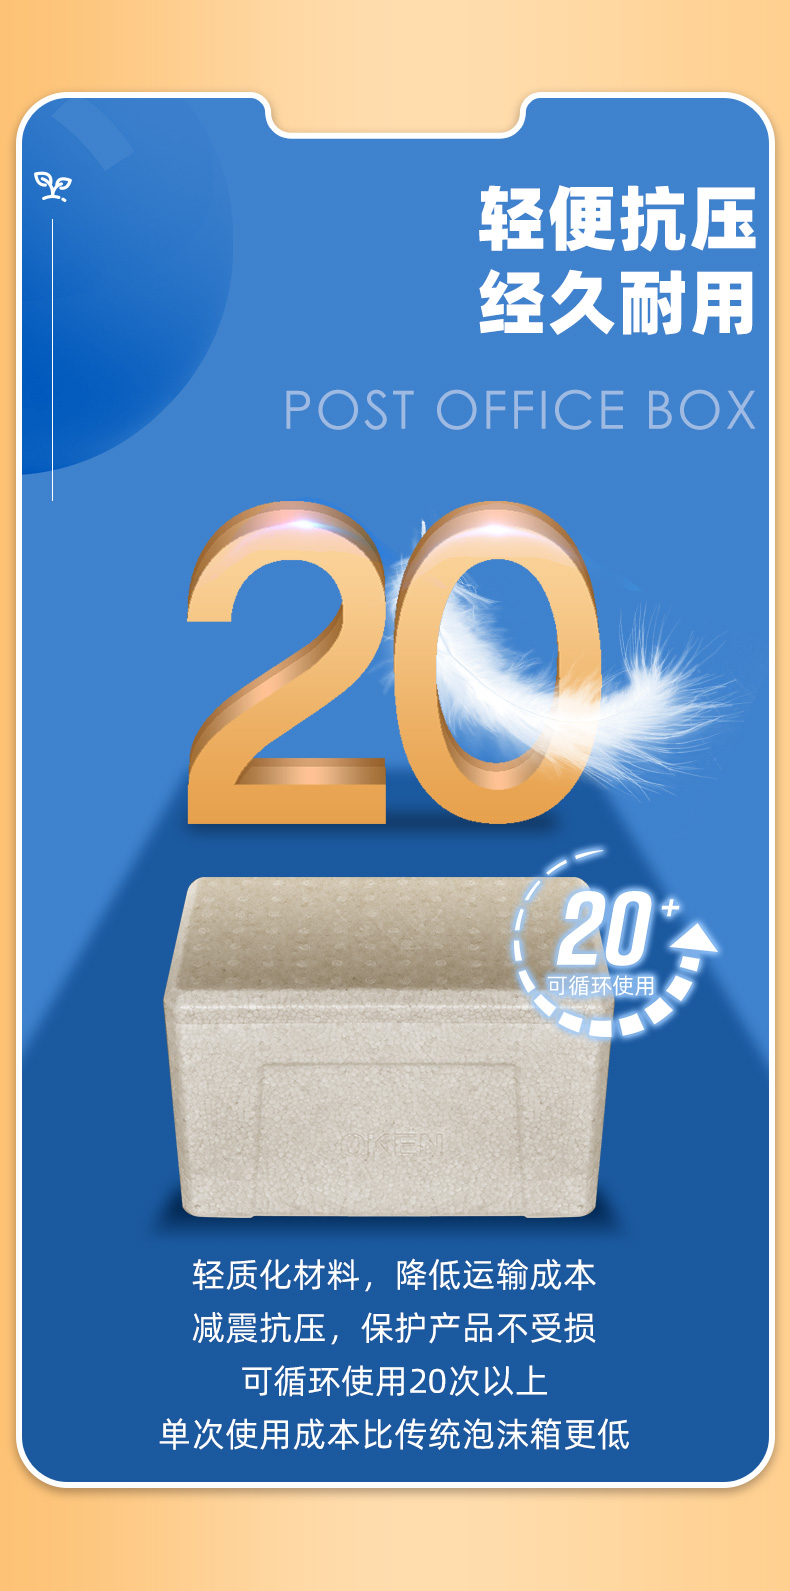 EPP邮政箱,邮政箱定制,邮政箱,邮政保温箱,环保邮政箱